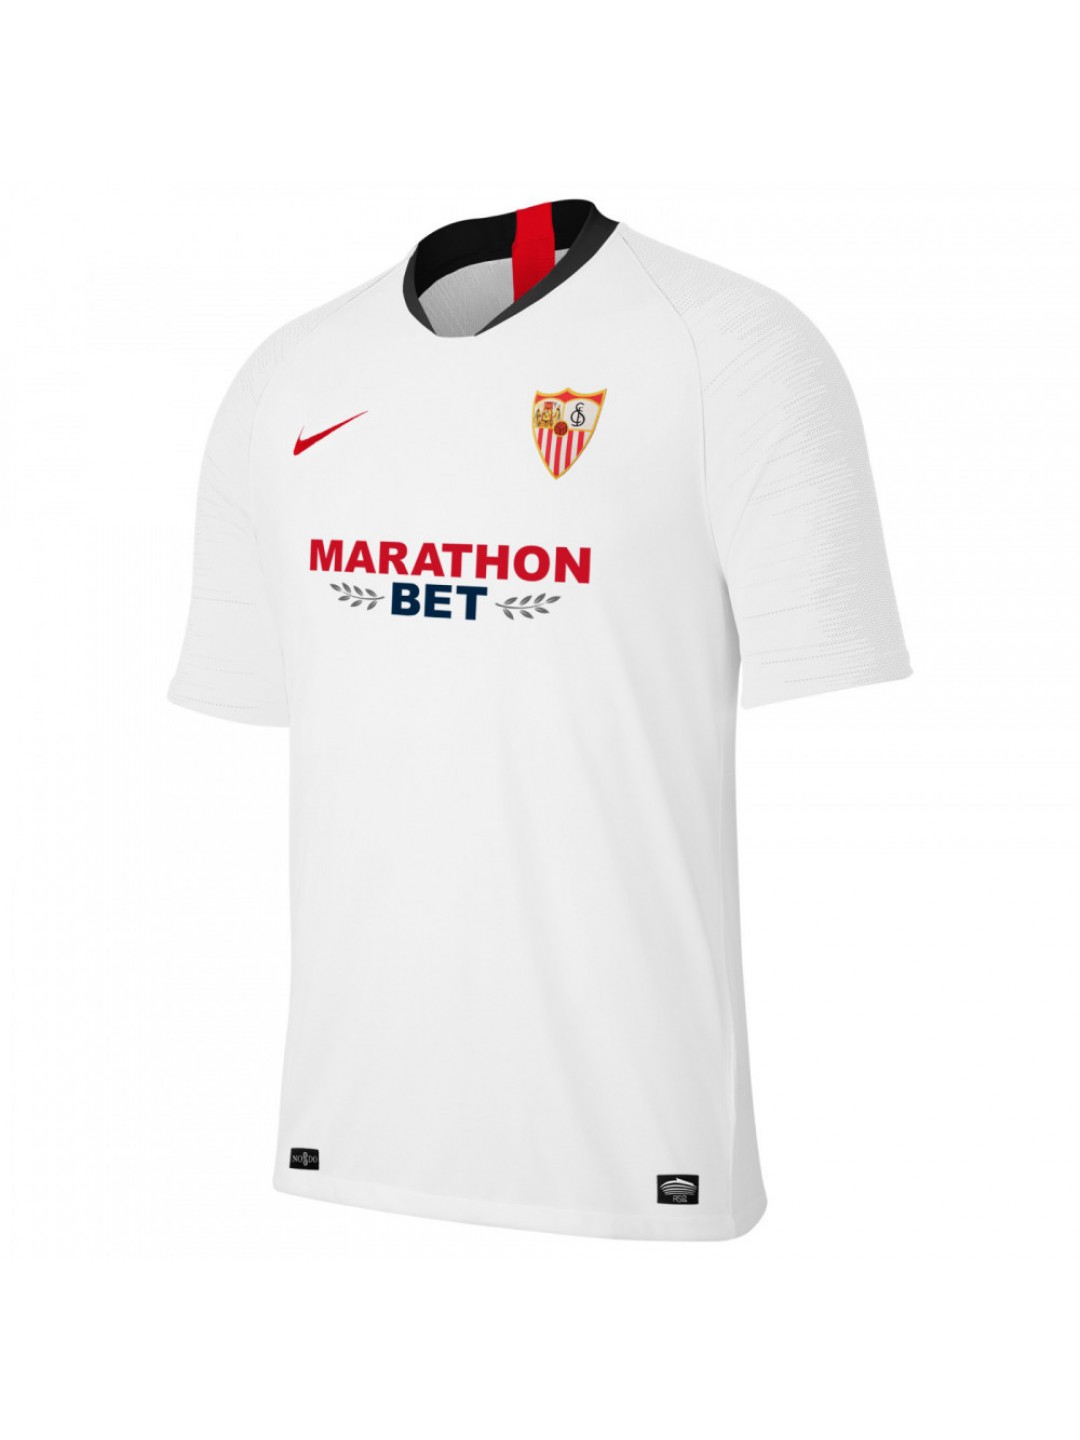 Comprar Camiseta Sevilla FC 2019/2020 Baratas